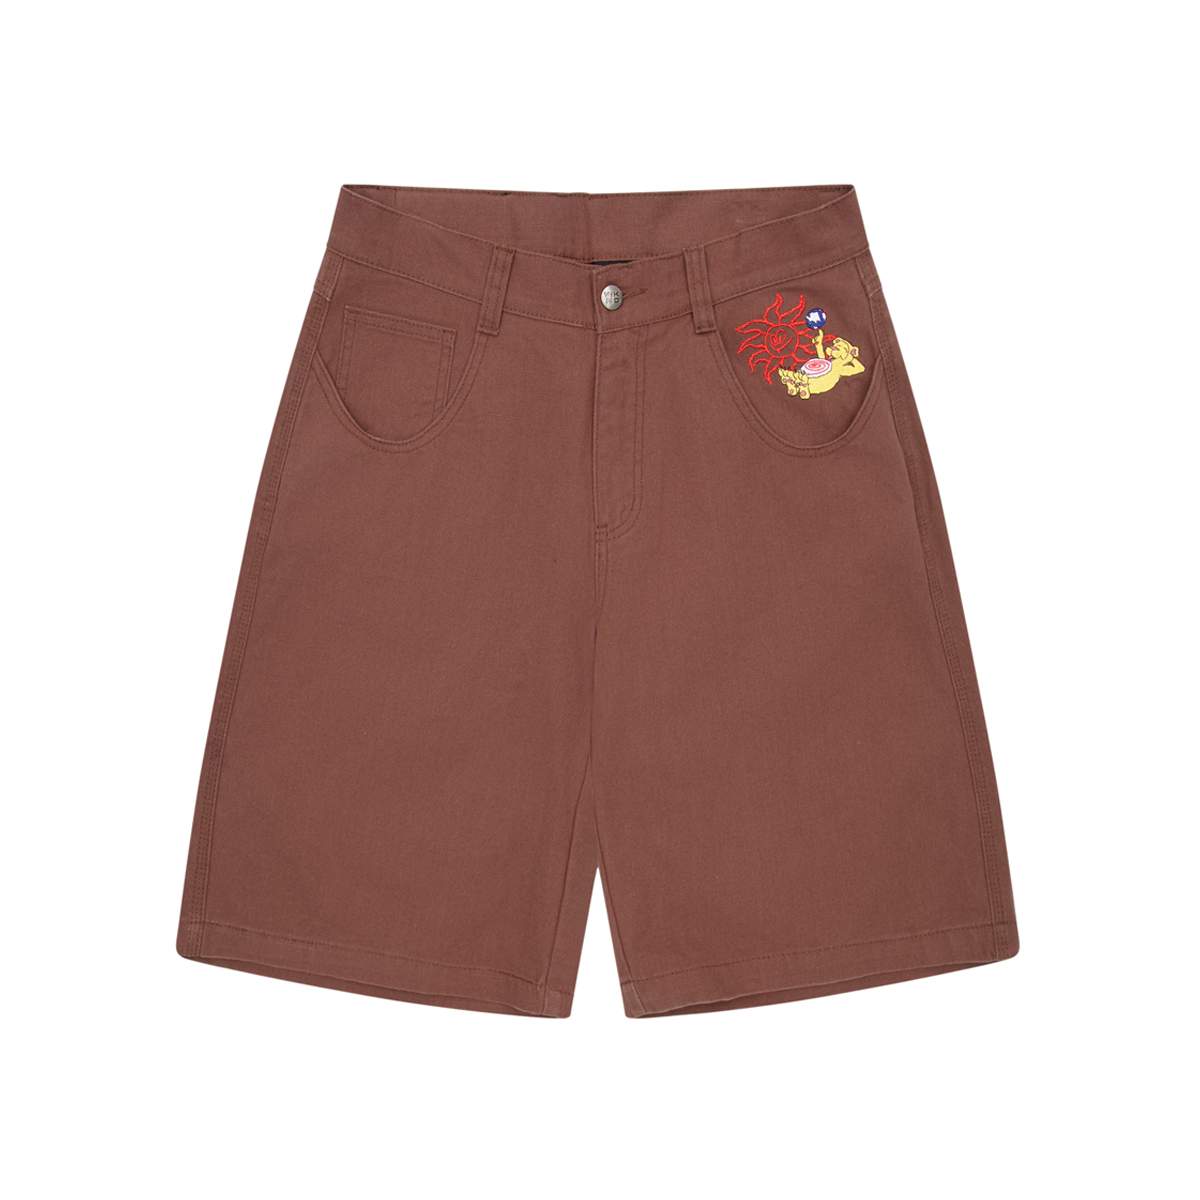 WKND Tubes Shorts - Washed Brown